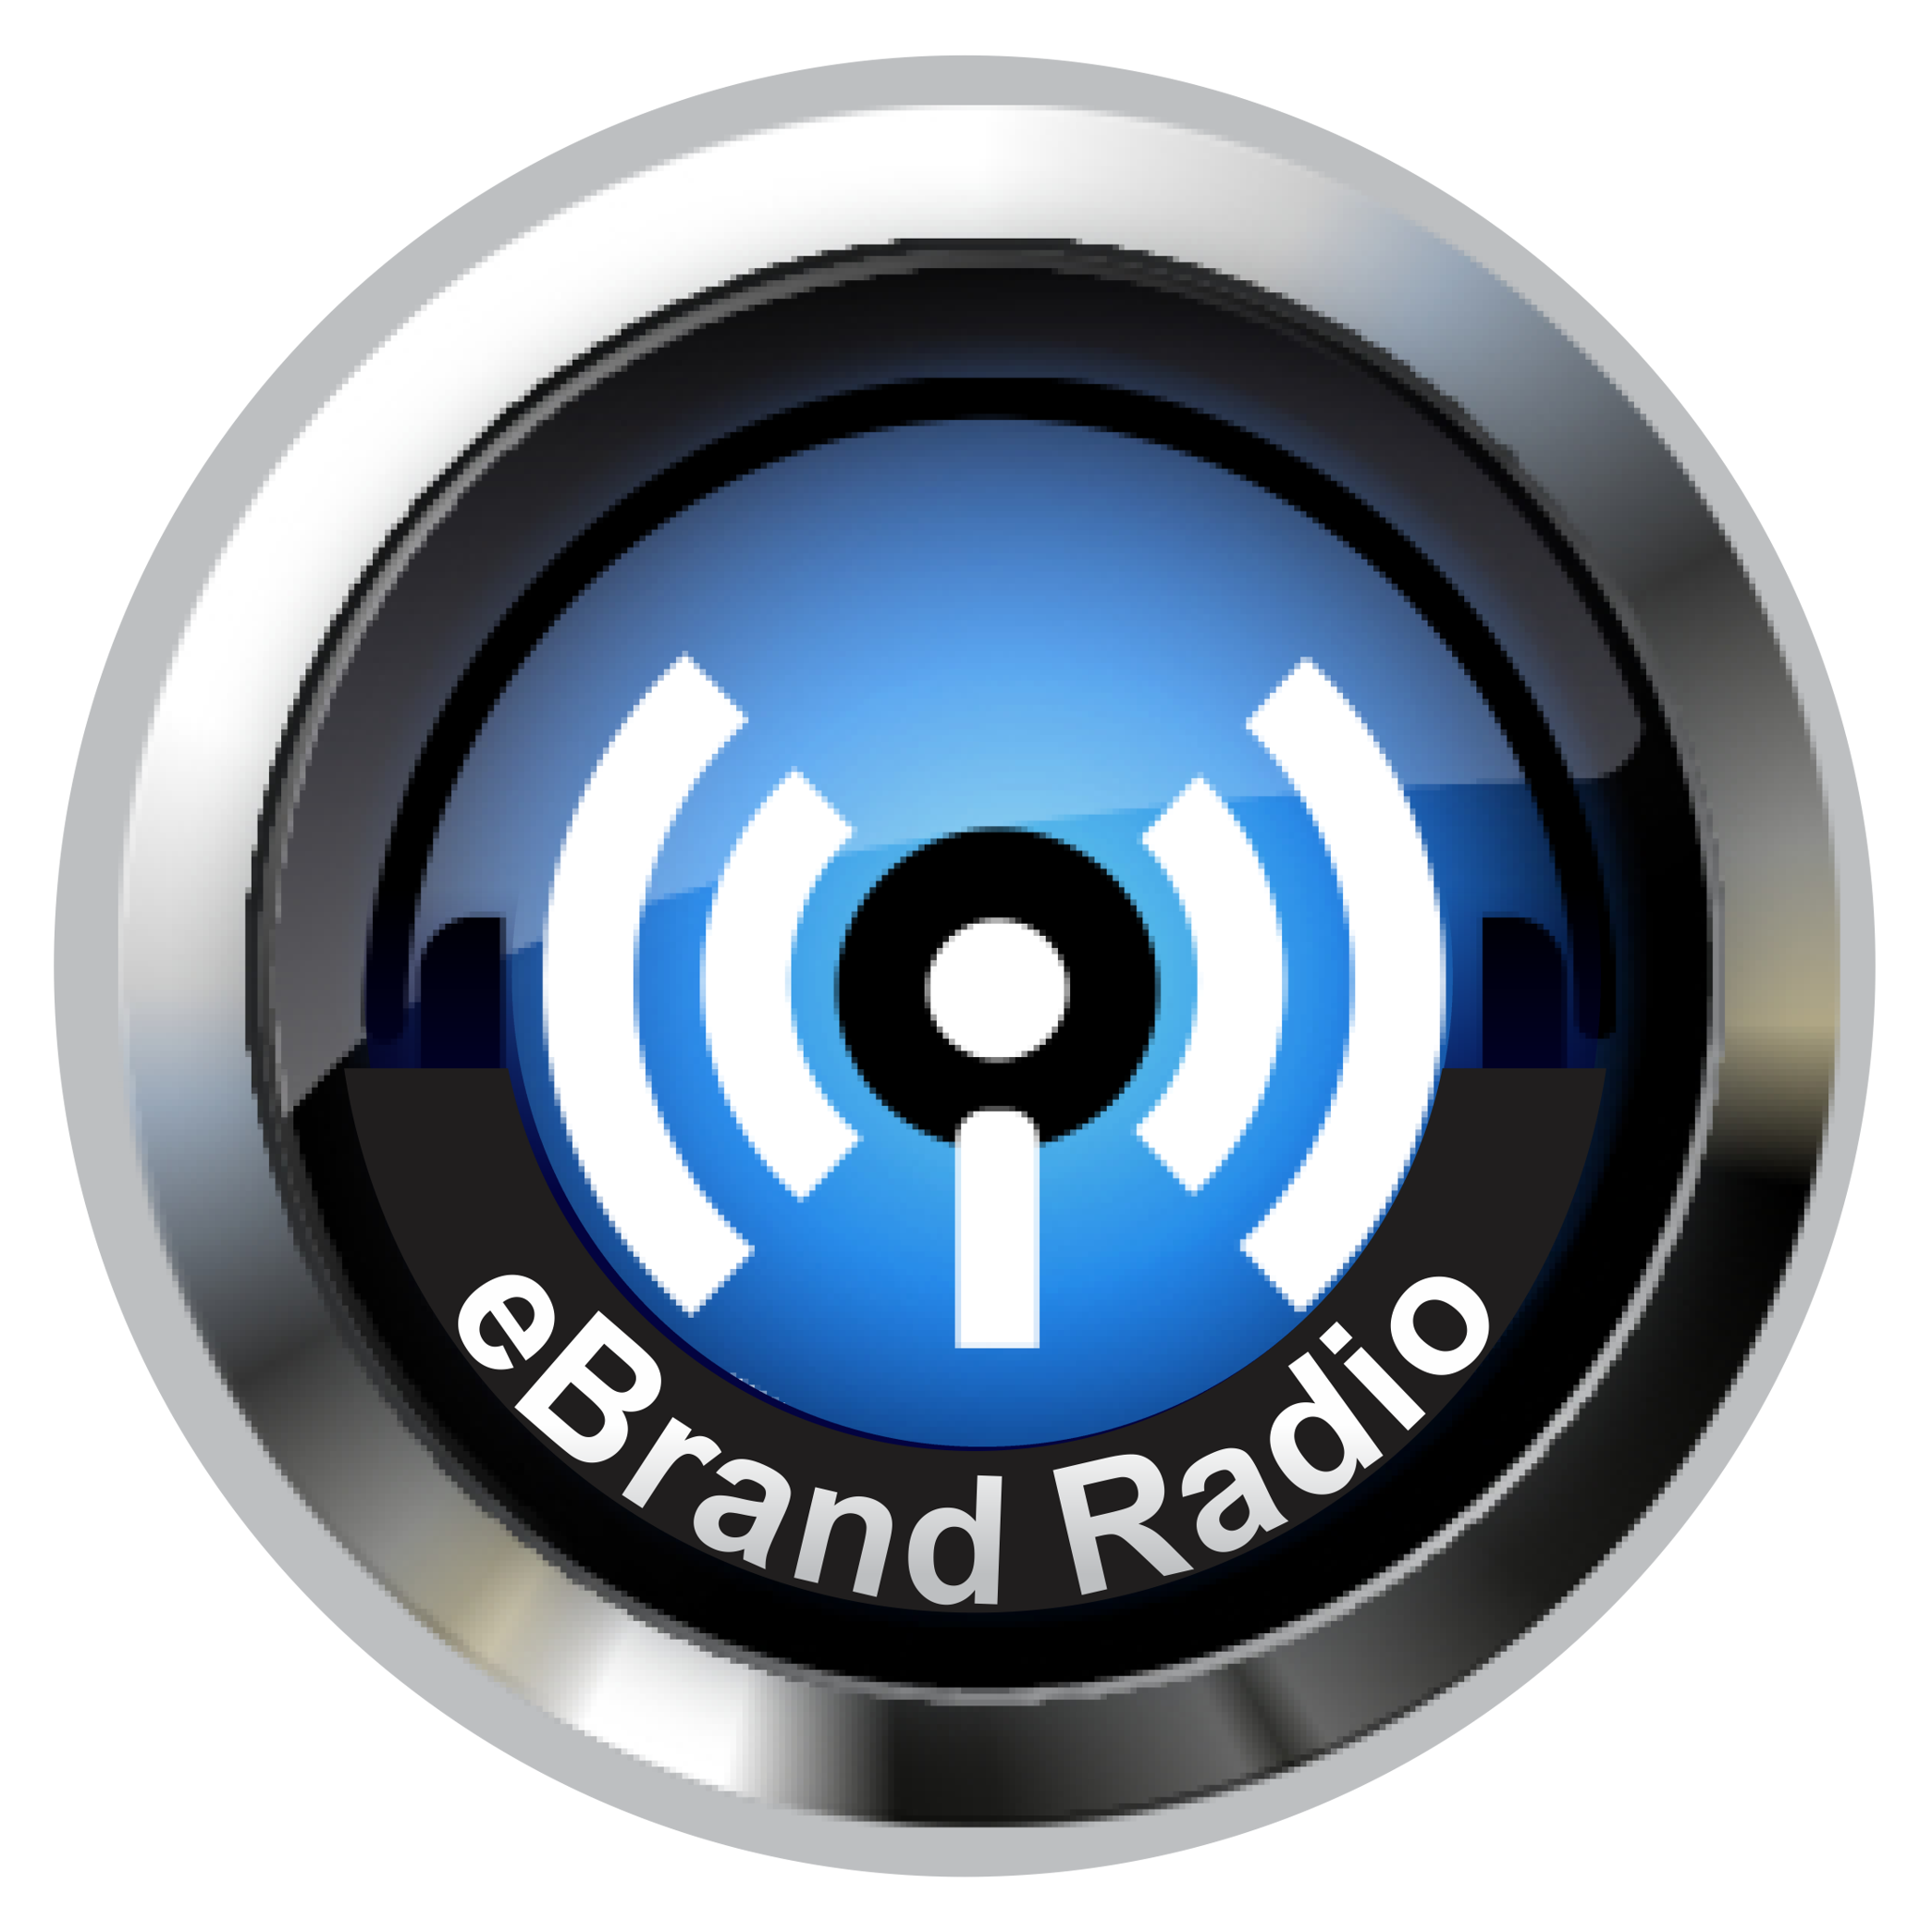 eBrand Radio